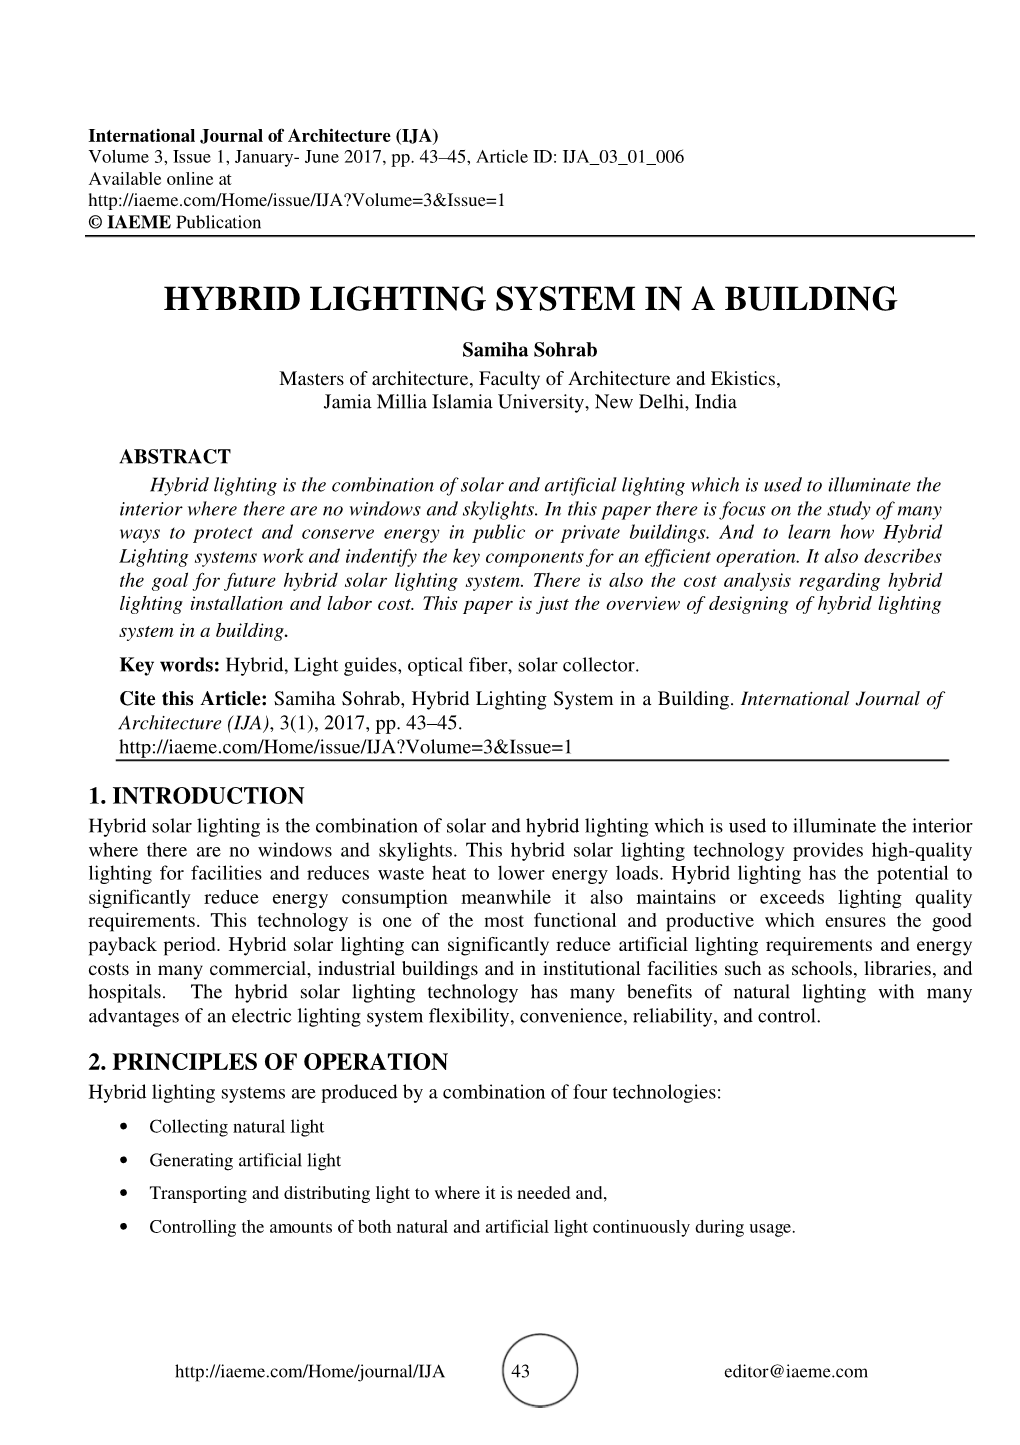 Hybrid Lighting System in a Building